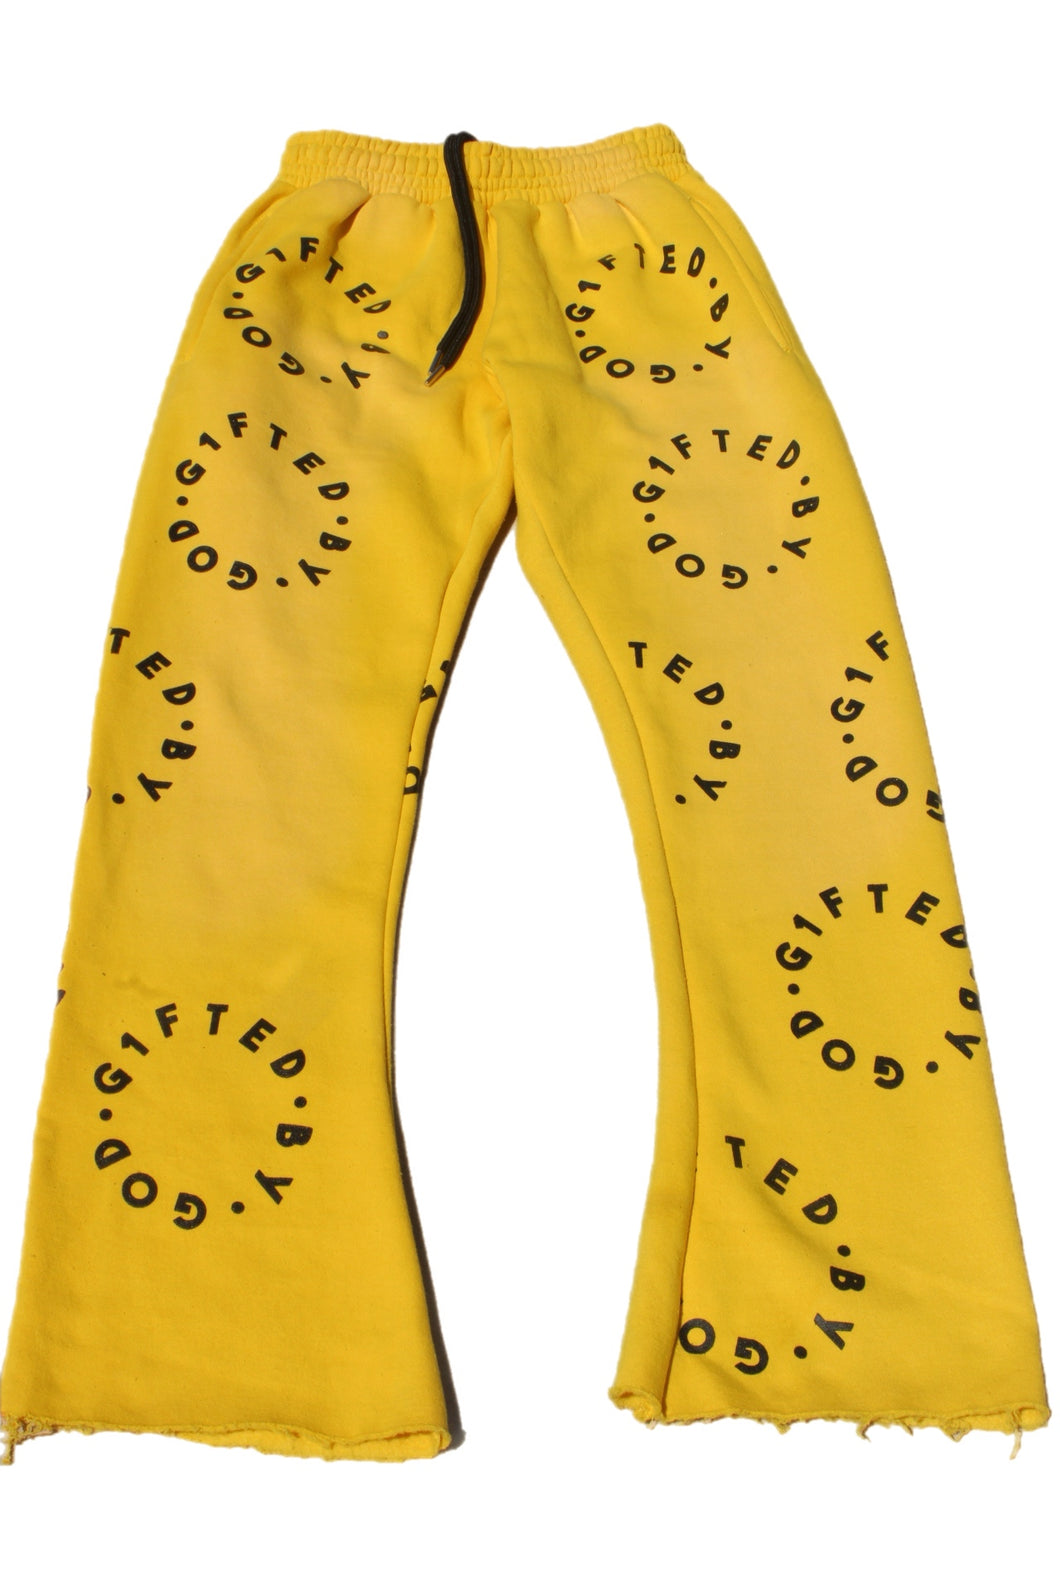 GBG Flare Sweatpants (Yellow/Black)